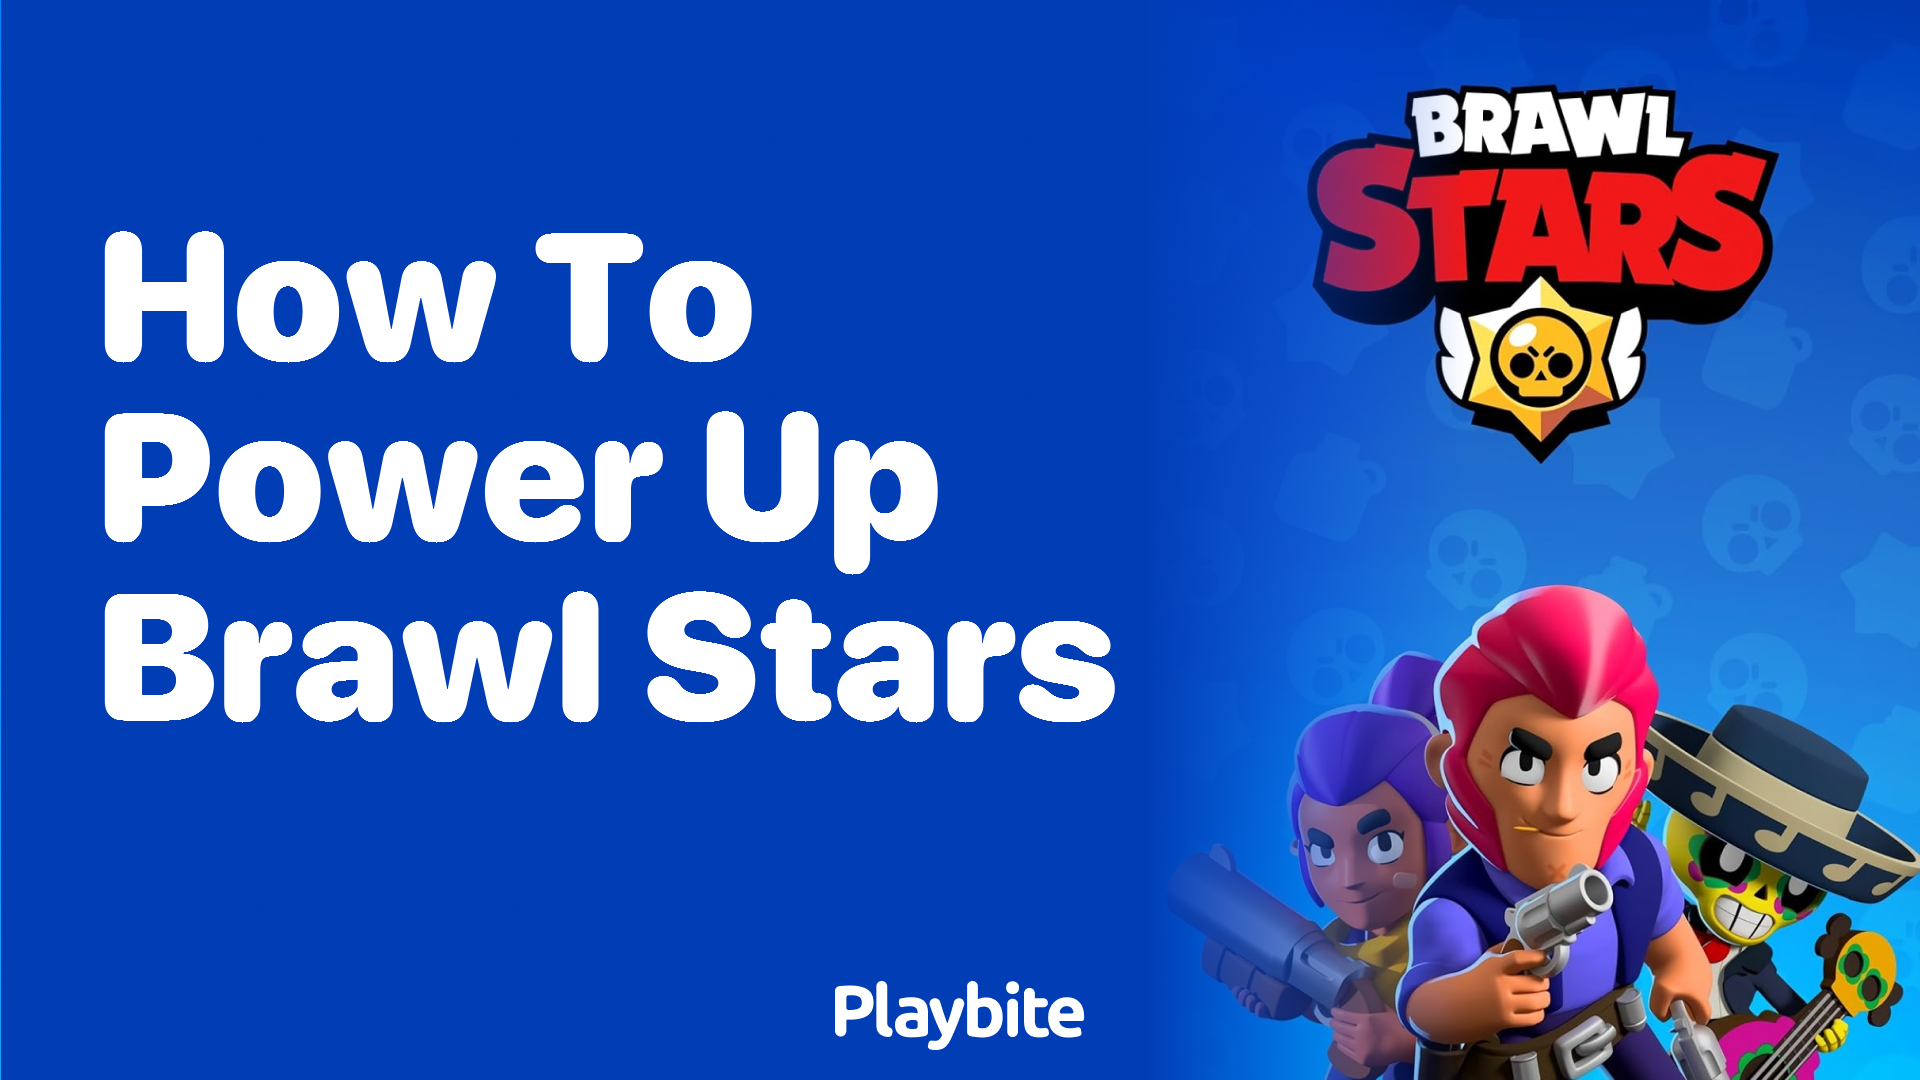 How to Draw Spike from Brawl Stars Step-by-Step - Playbite